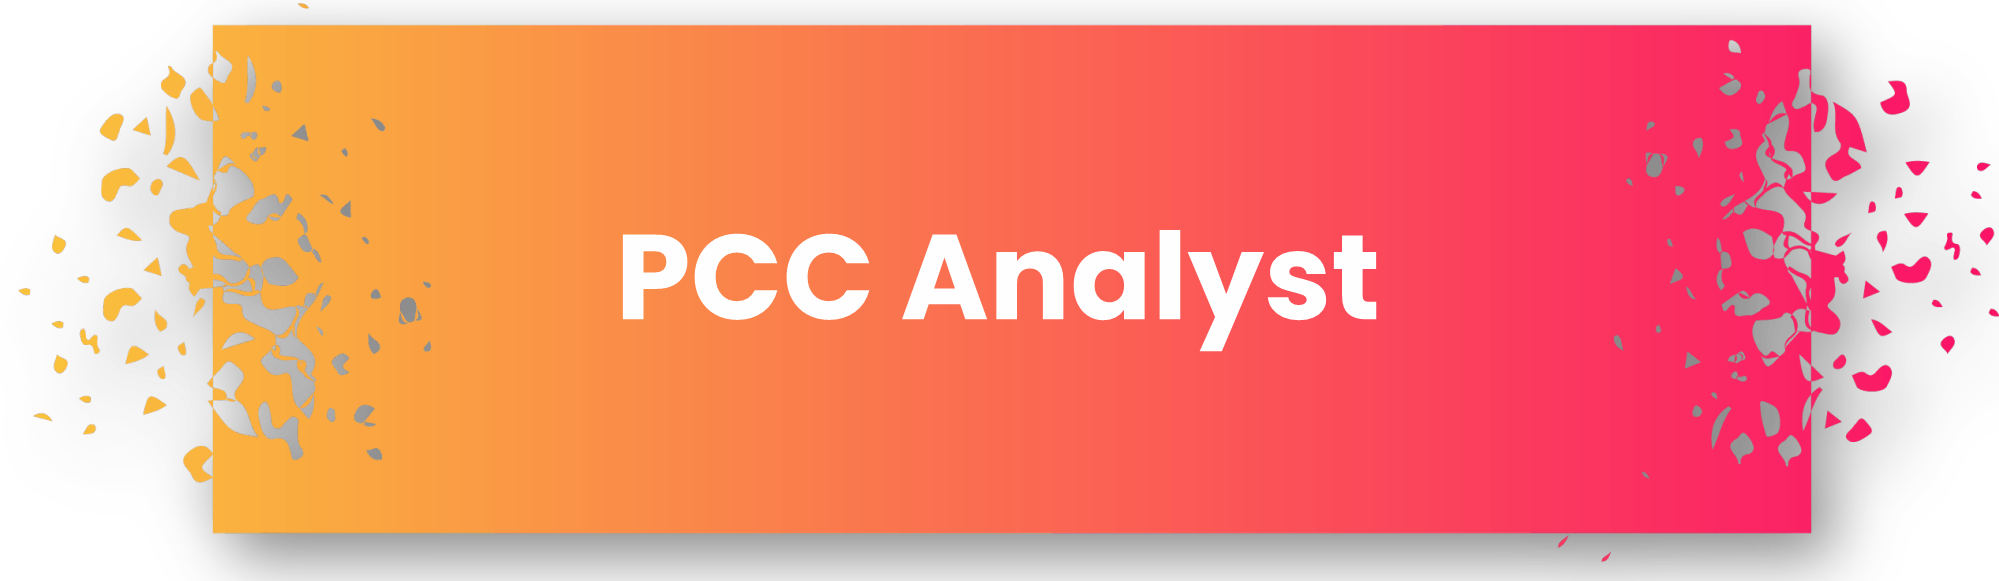 PCC Analyst